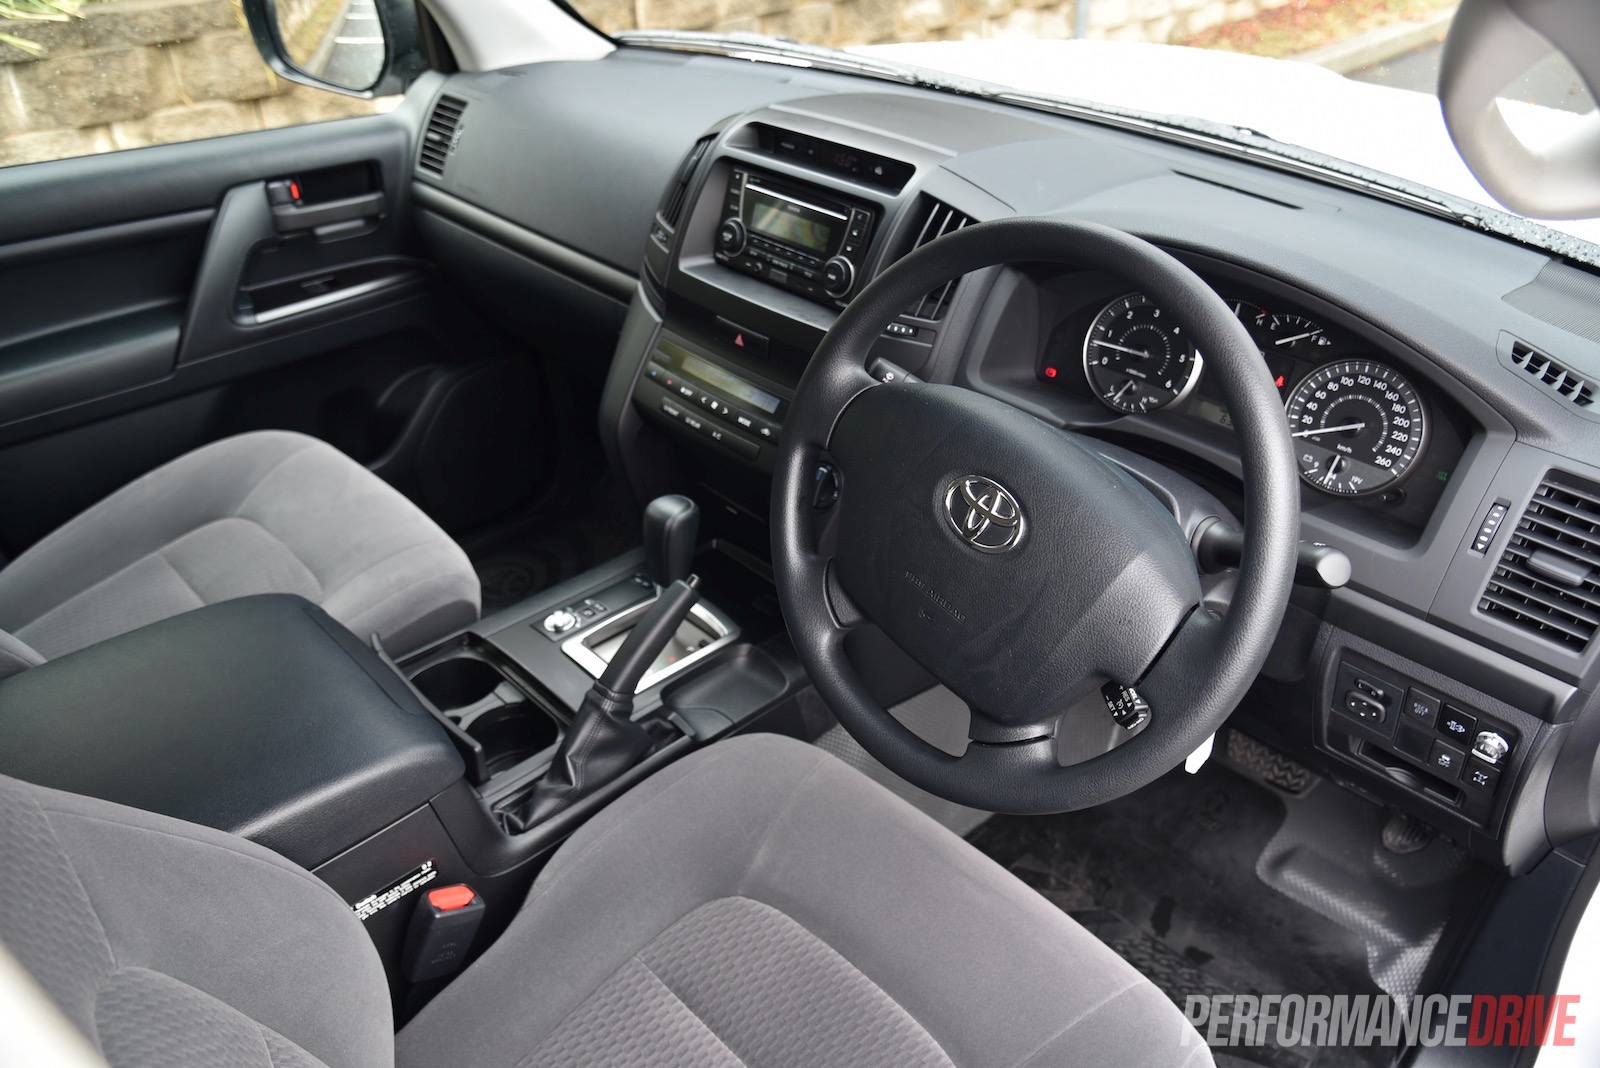 2016 Toyota LandCruiser GX review (video) | PerformanceDrive